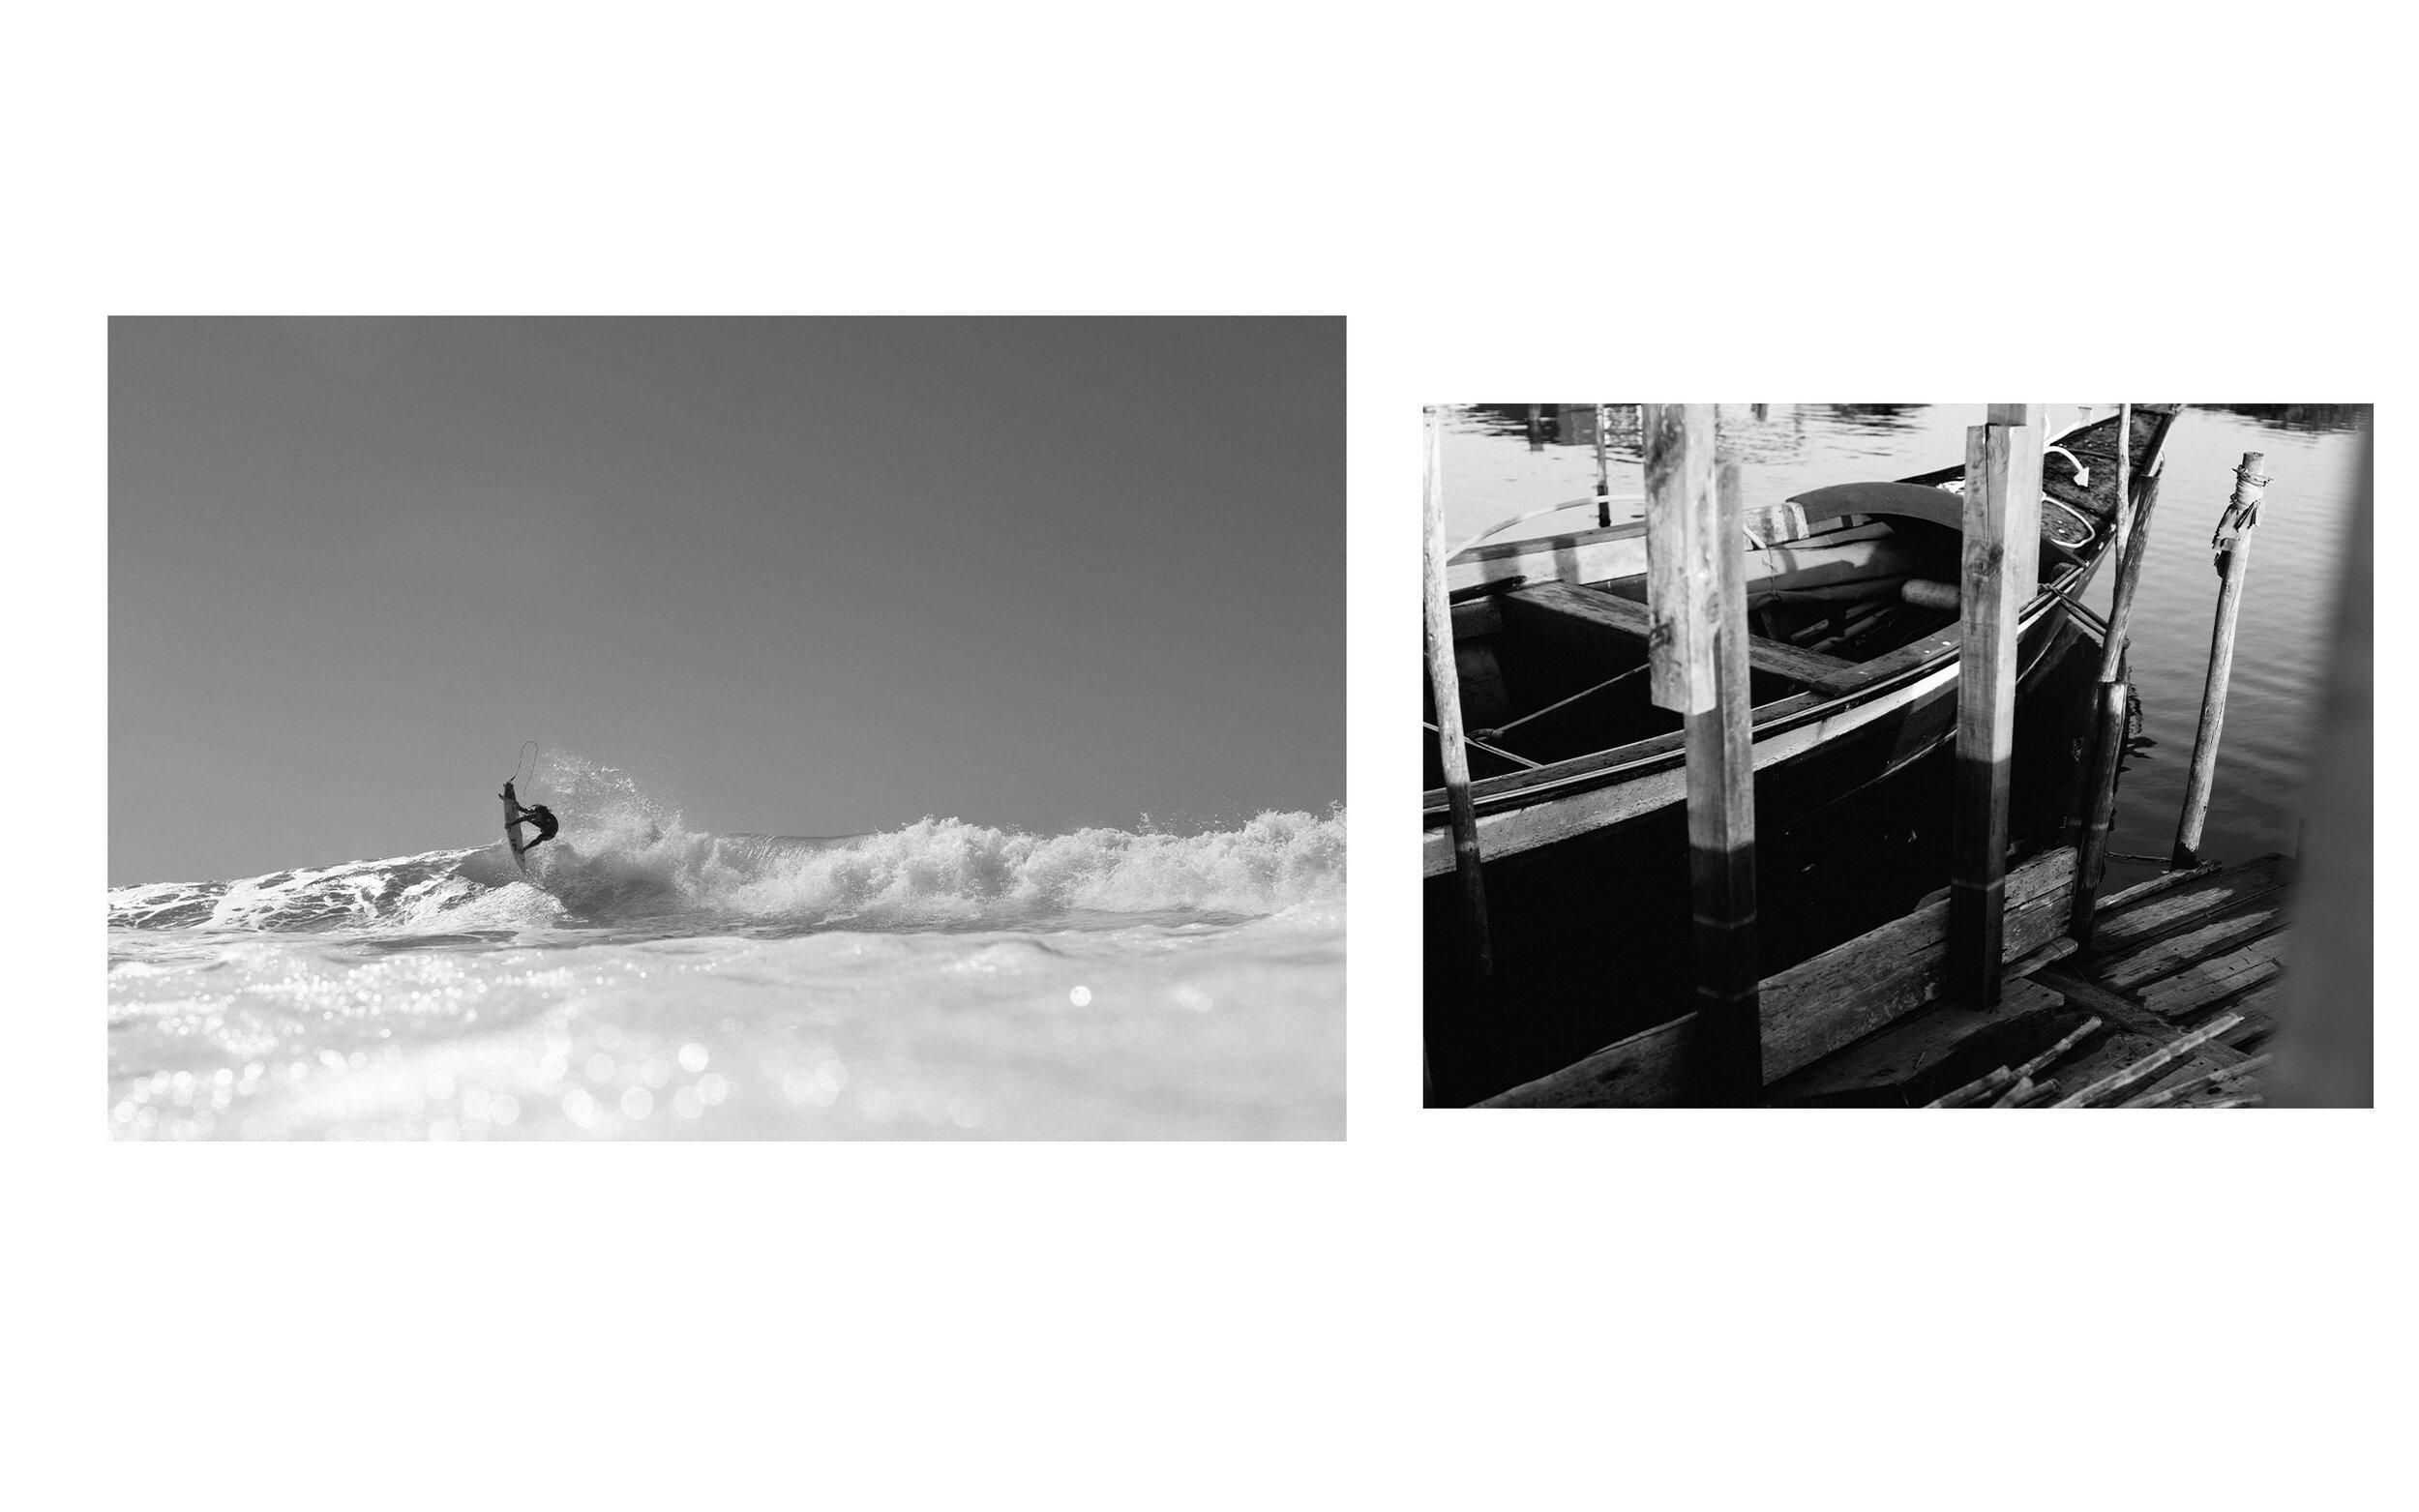 toby-butler-photographer-photography-portugal-surfing-surf-landscape-travelphotographer-inkglobal-portrait-tourism-ocean-algarve-photo-surfer-love-earth-climate-planet-beautiful-wild-people- portrait-documentary-4.jpg